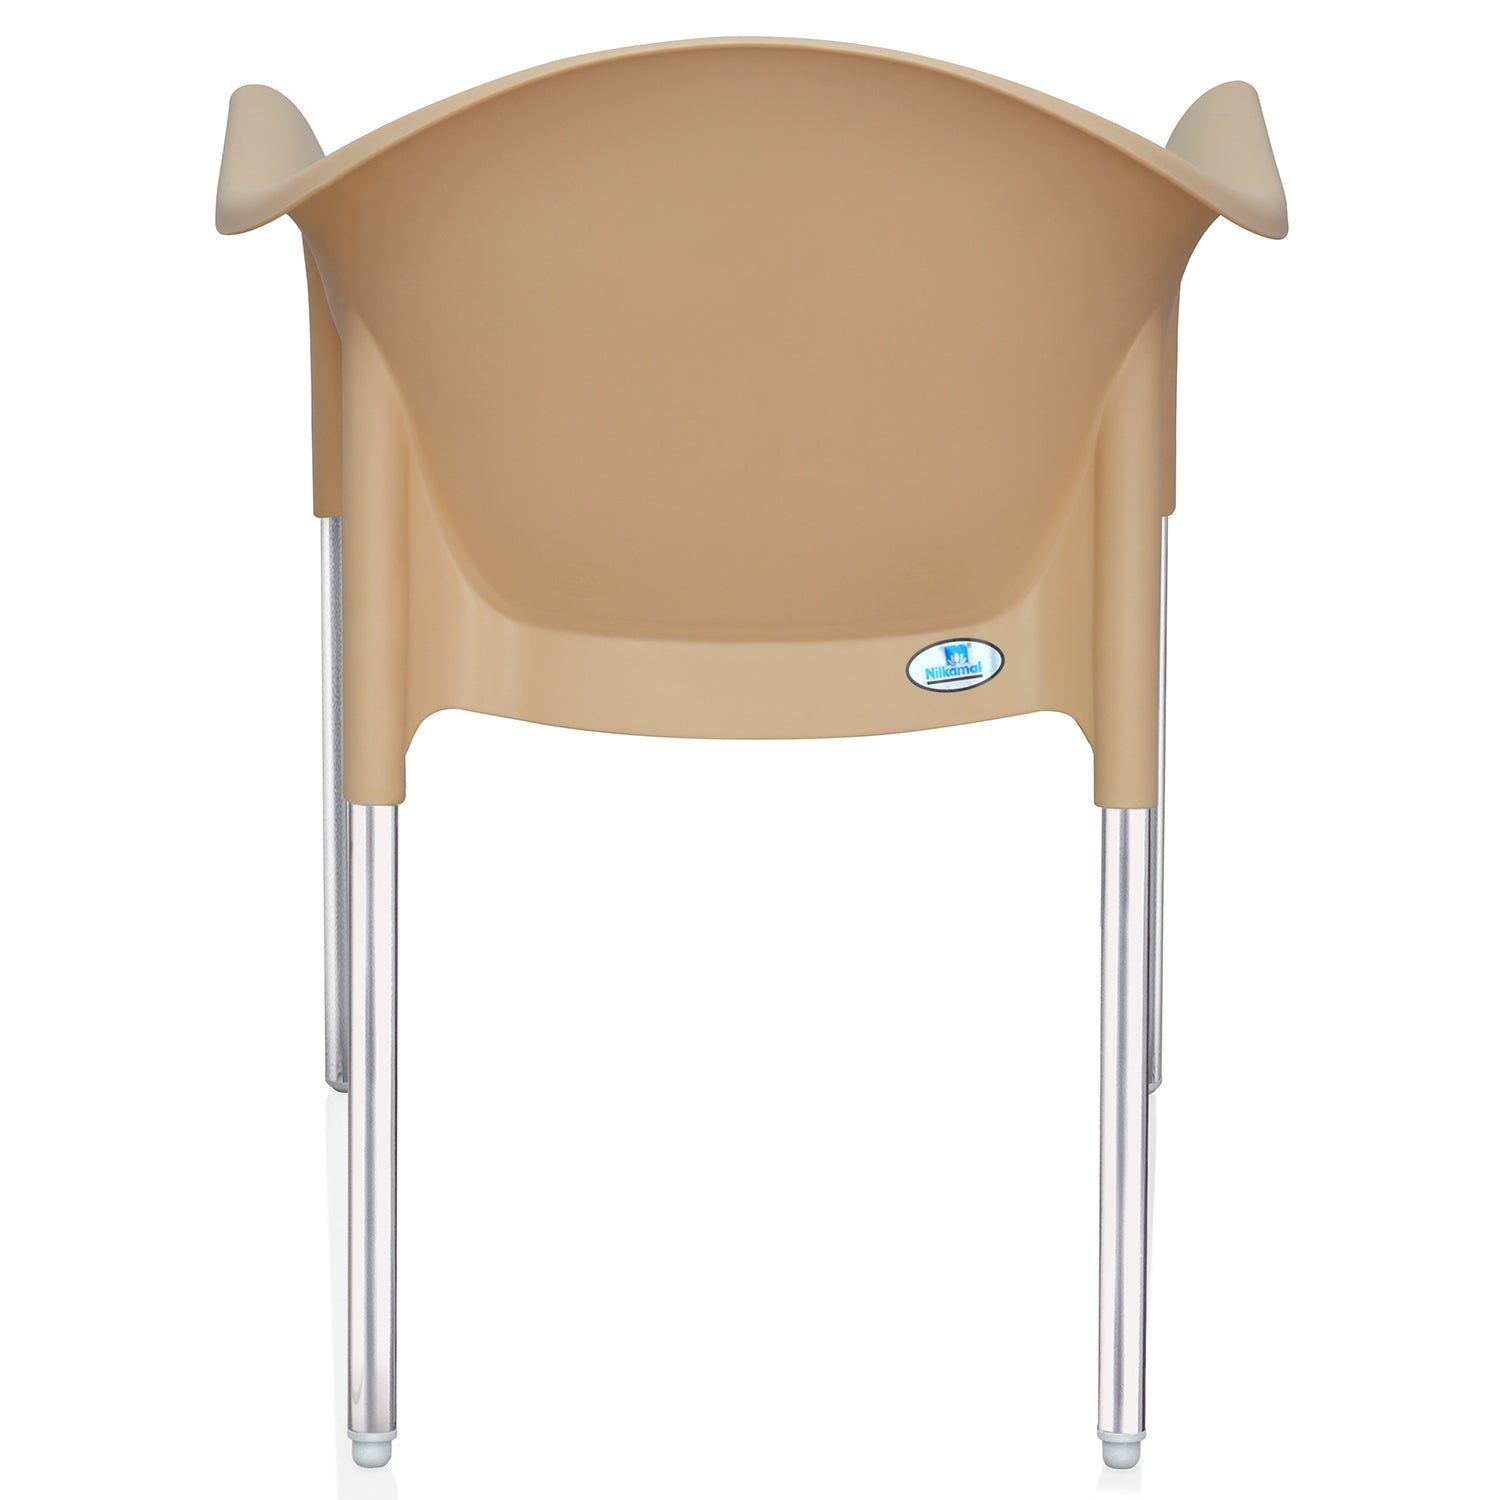 Nilkamal Novella 09 Chair (Biscuit)